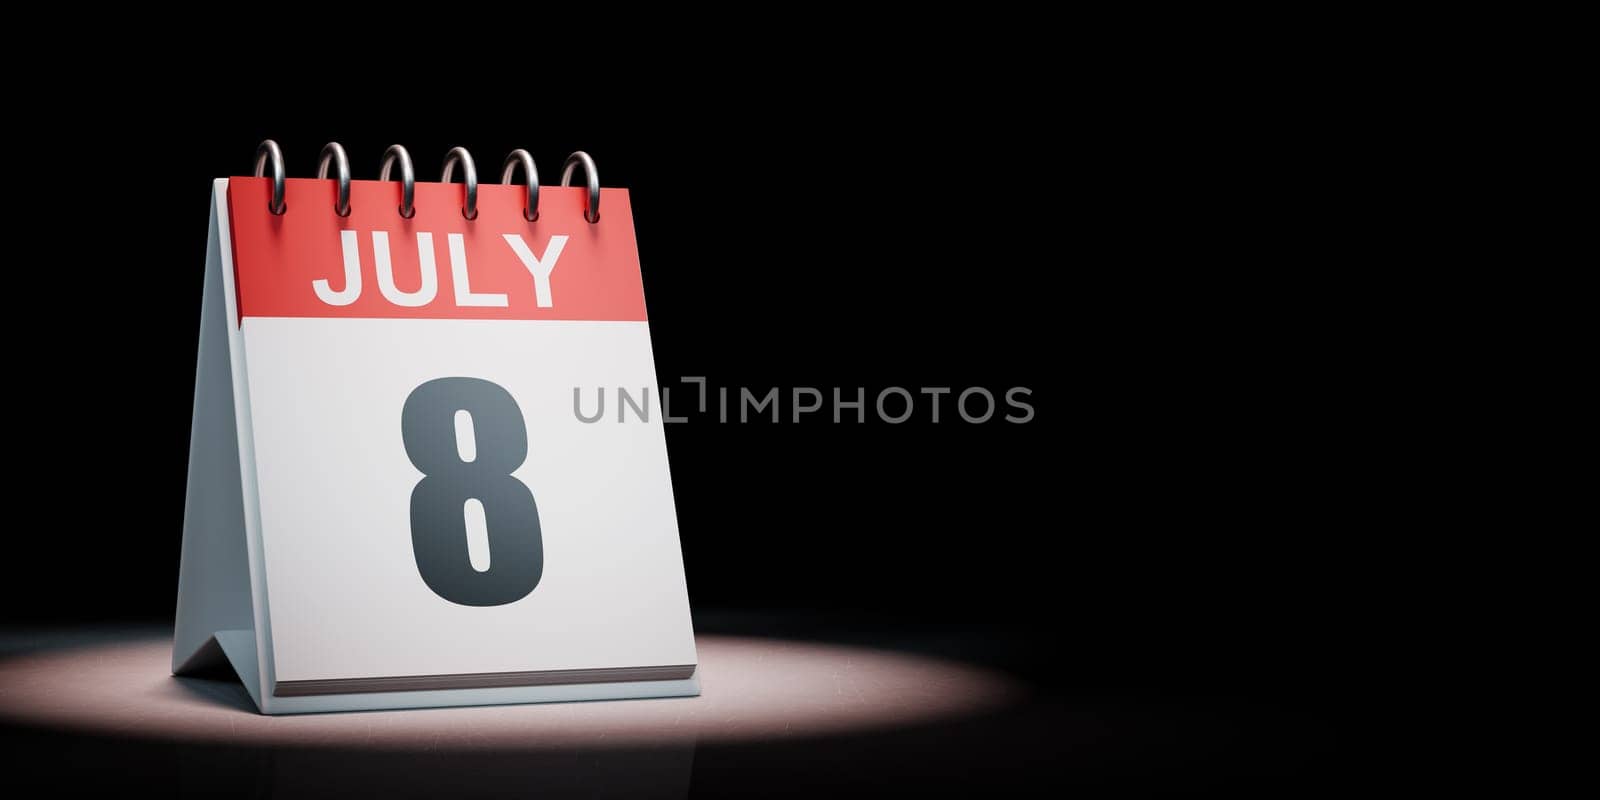 July 8 Calendar Spotlighted on Black Background by make